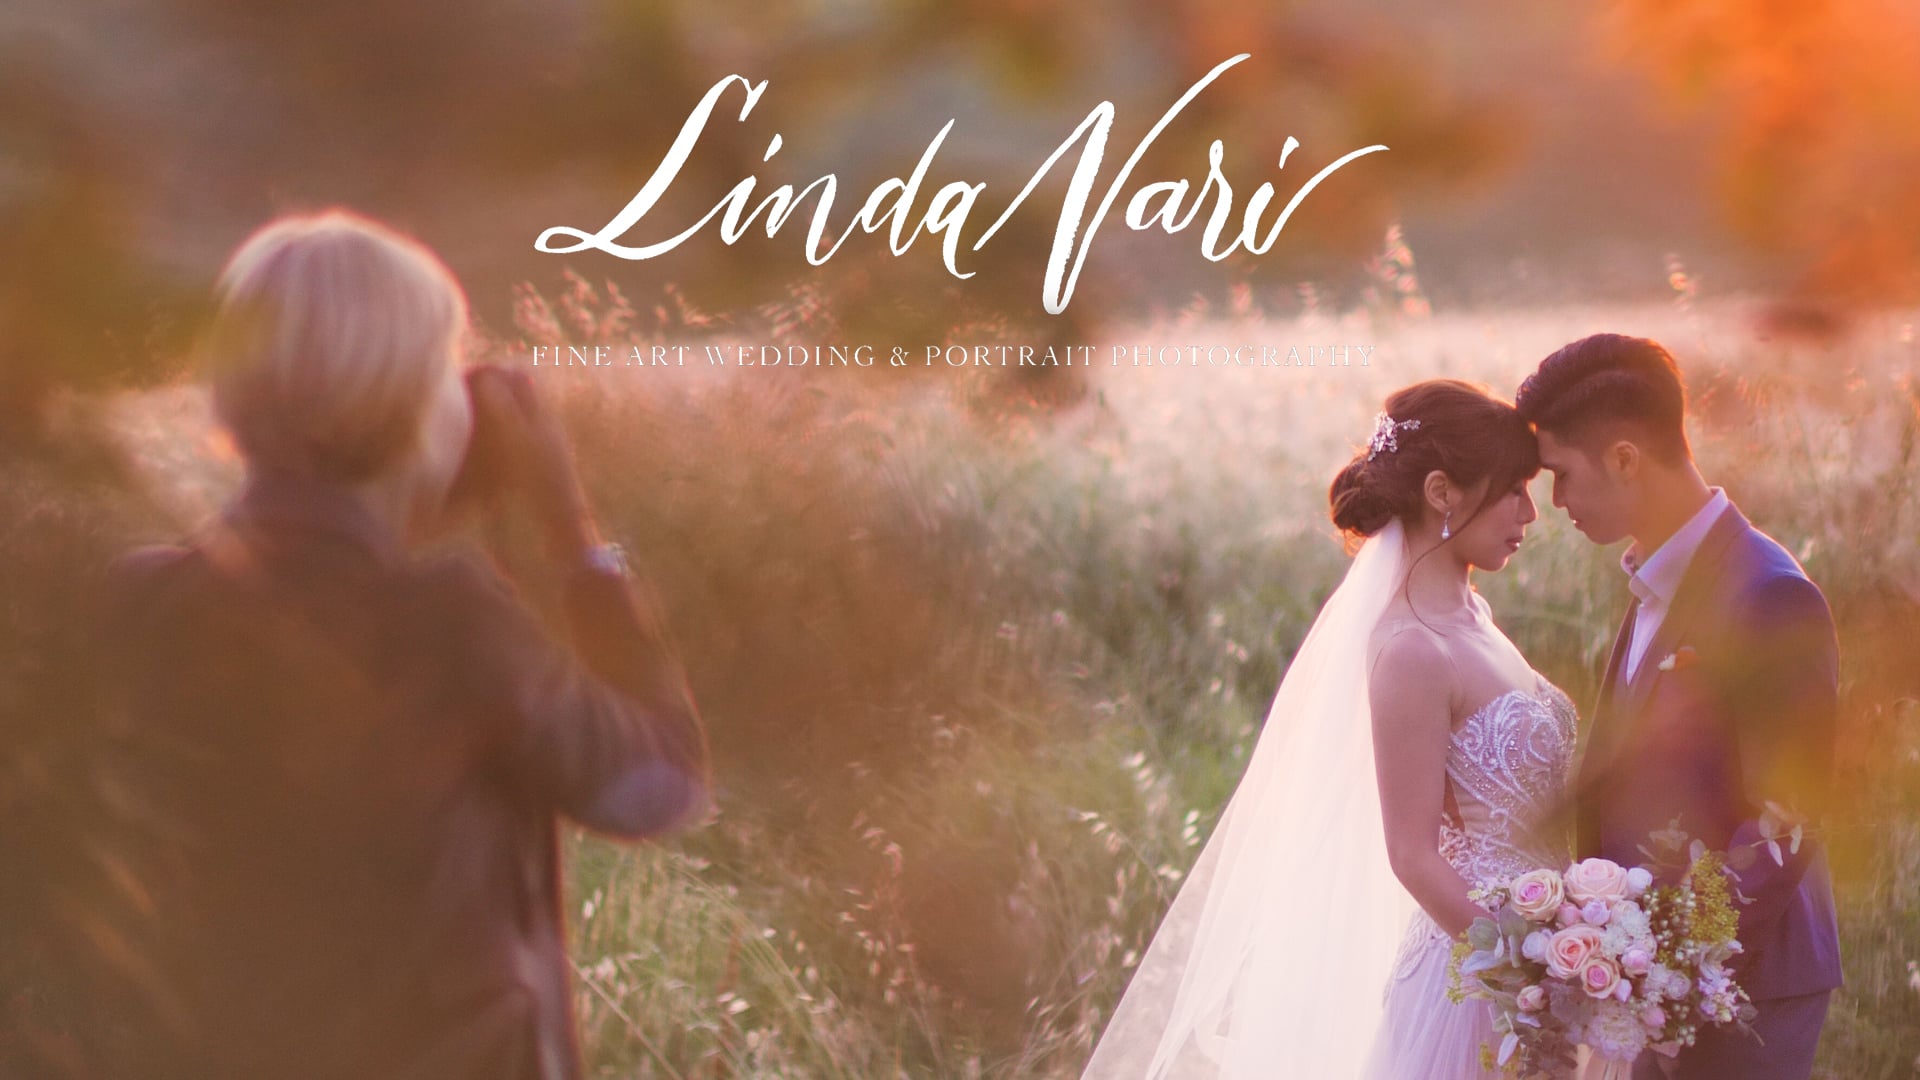 Linda Nari Photography